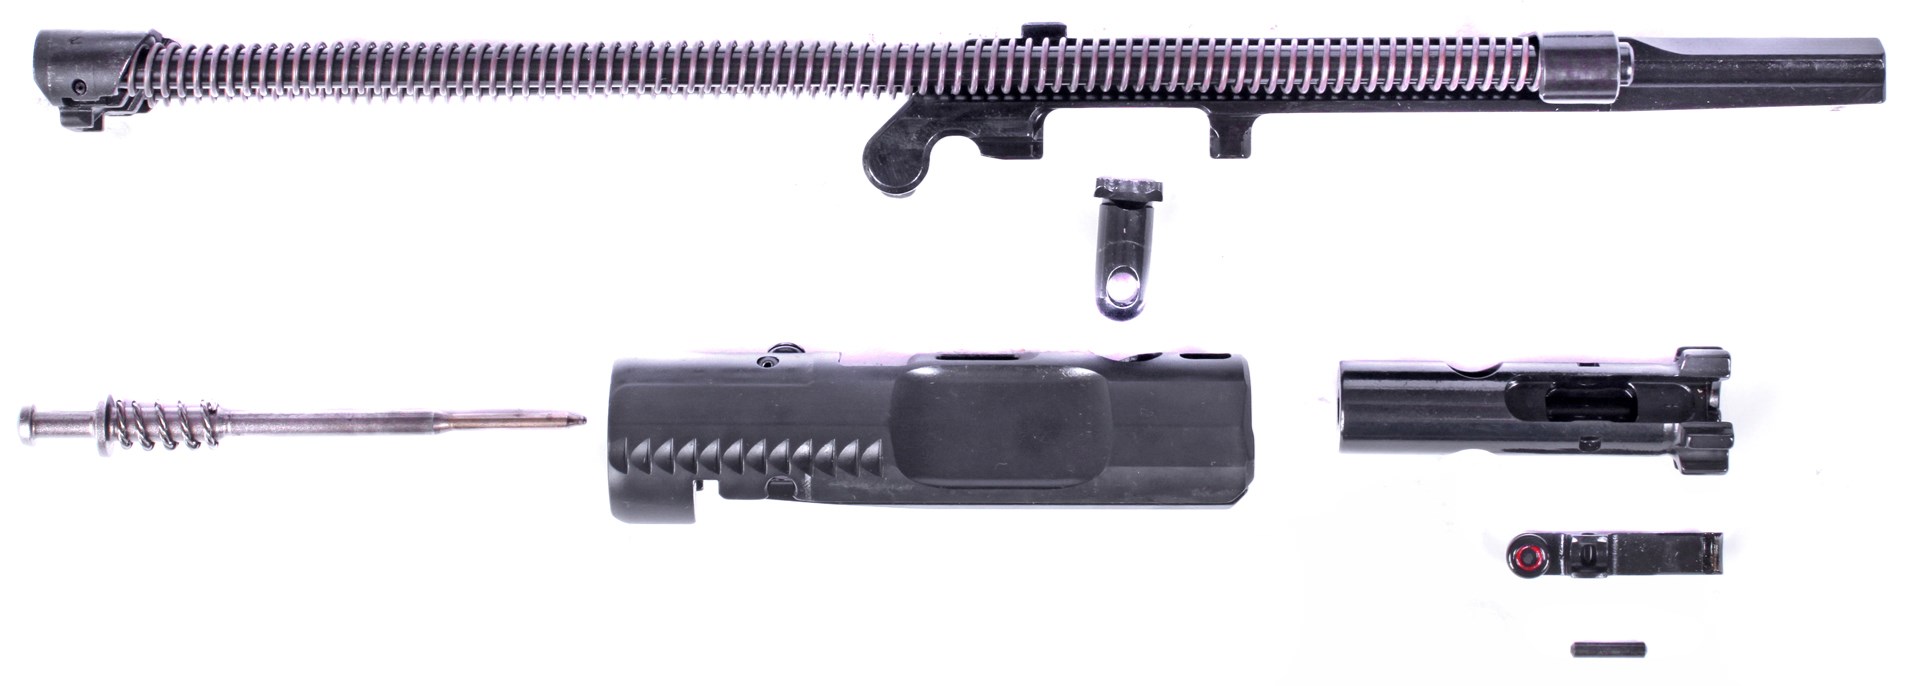 sig sauer mcx spear lt bolt disassembled view parts gun rifle carbine